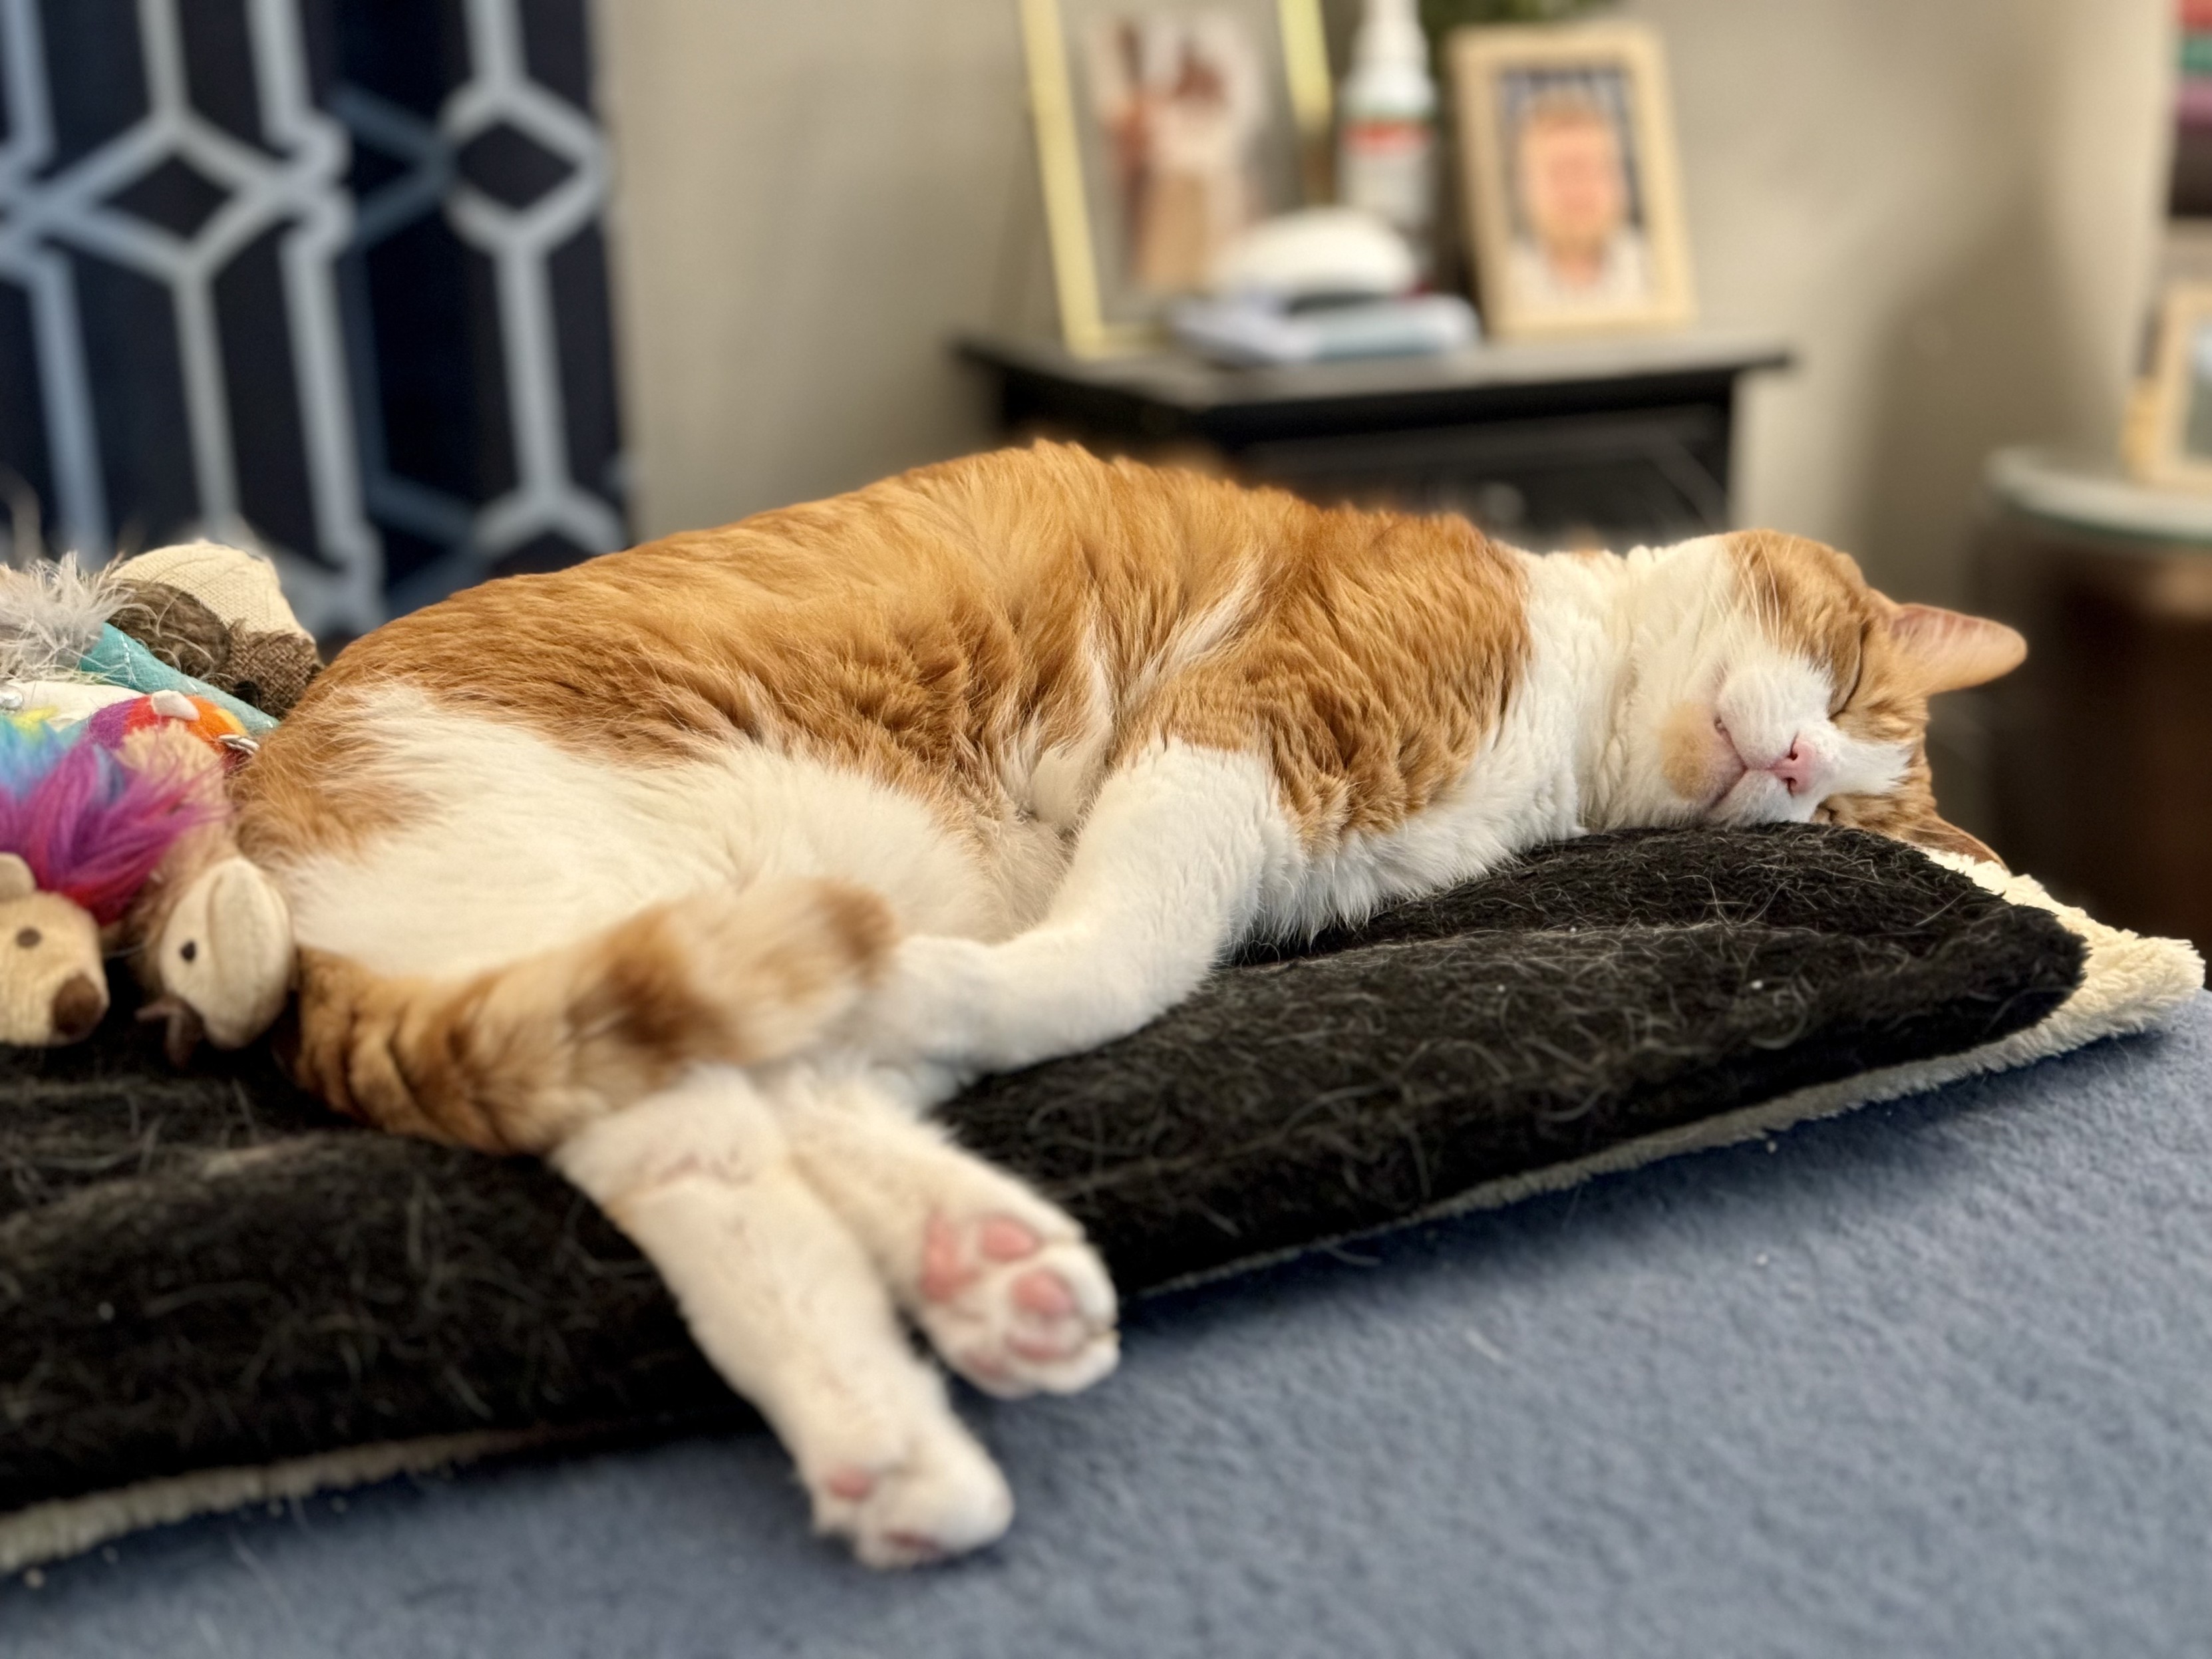 An orange tabby cat sleeps soundly on a black cat mat.